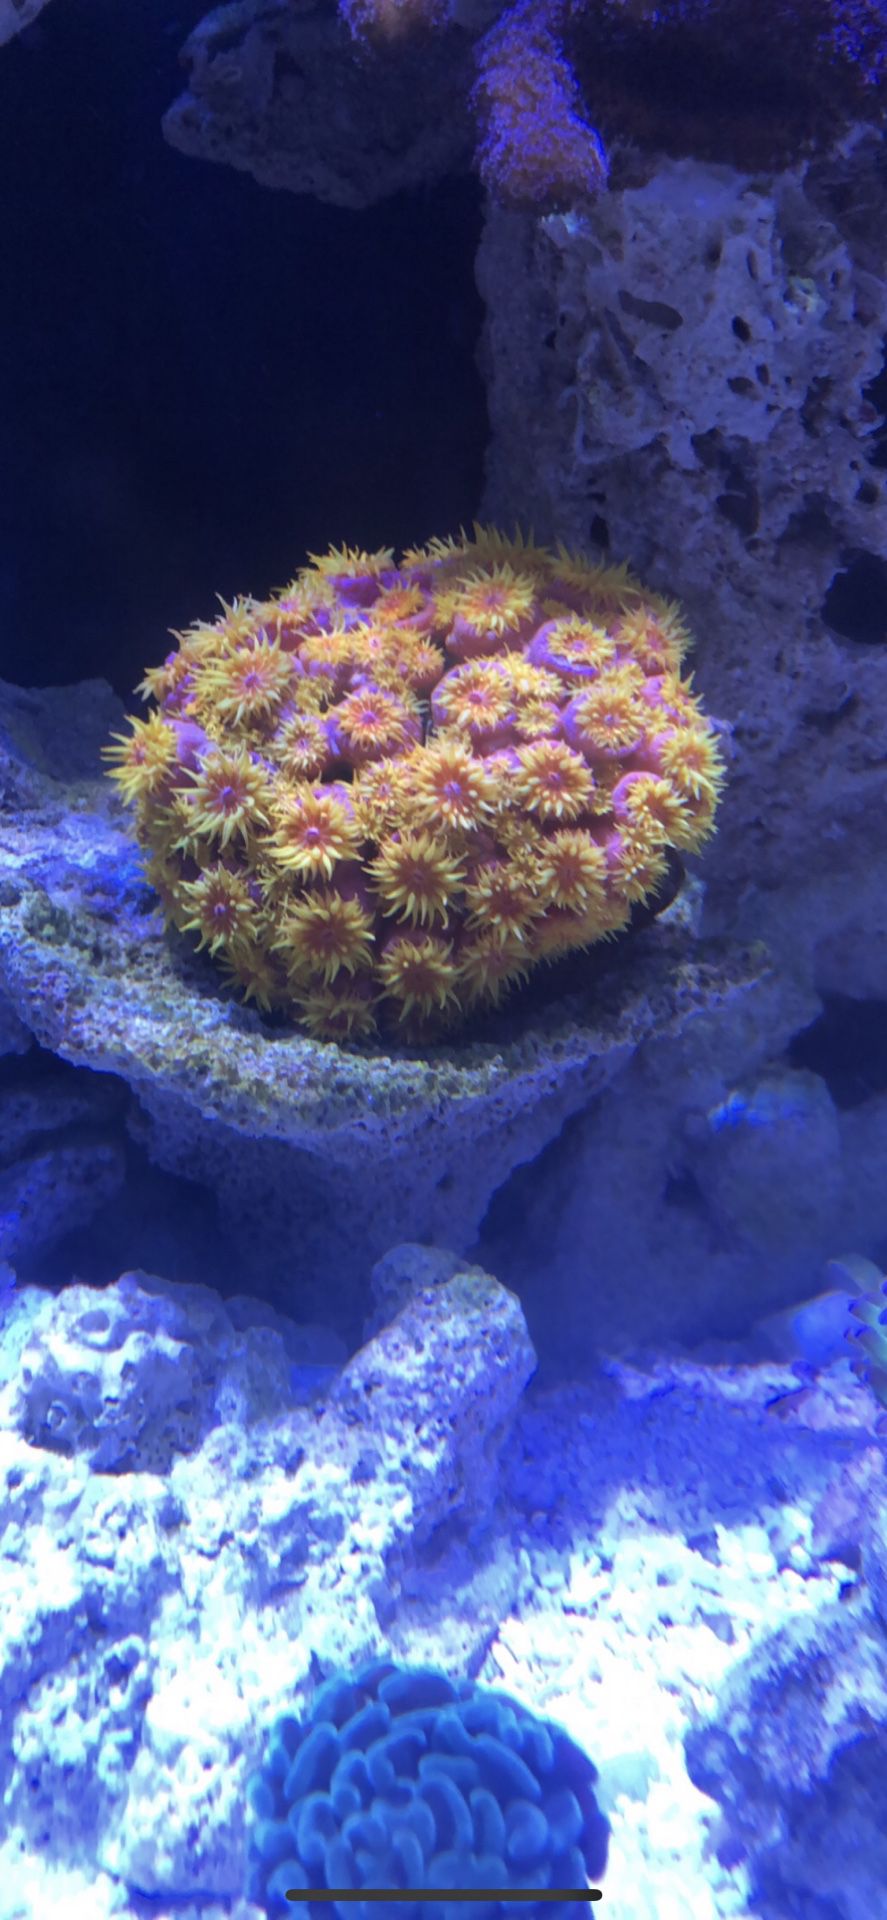 Sun coral colony for sale - cheap